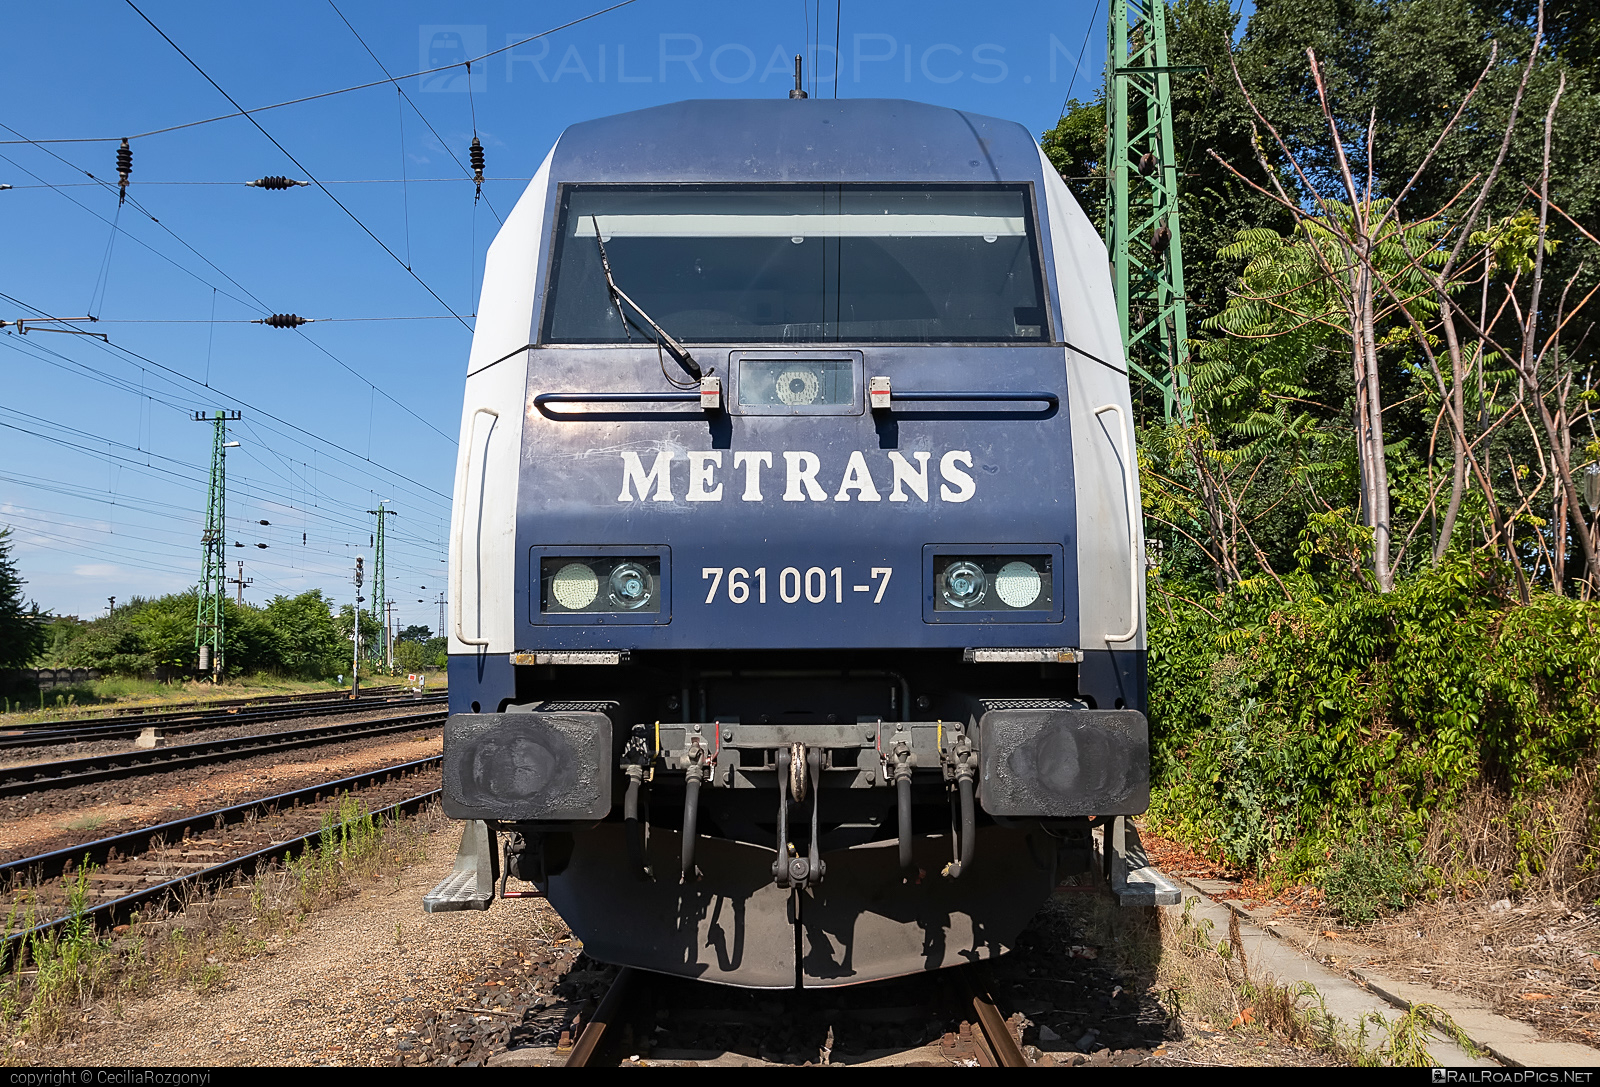 Siemens ER20 - 761 001-7 operated by METRANS (Danubia) a.s. #er20 #er20hercules #eurorunner #hercules #hhla #metrans #metransdanubia #siemens #siemenser20 #siemenser20hercules #siemenseurorunner #siemenshercules